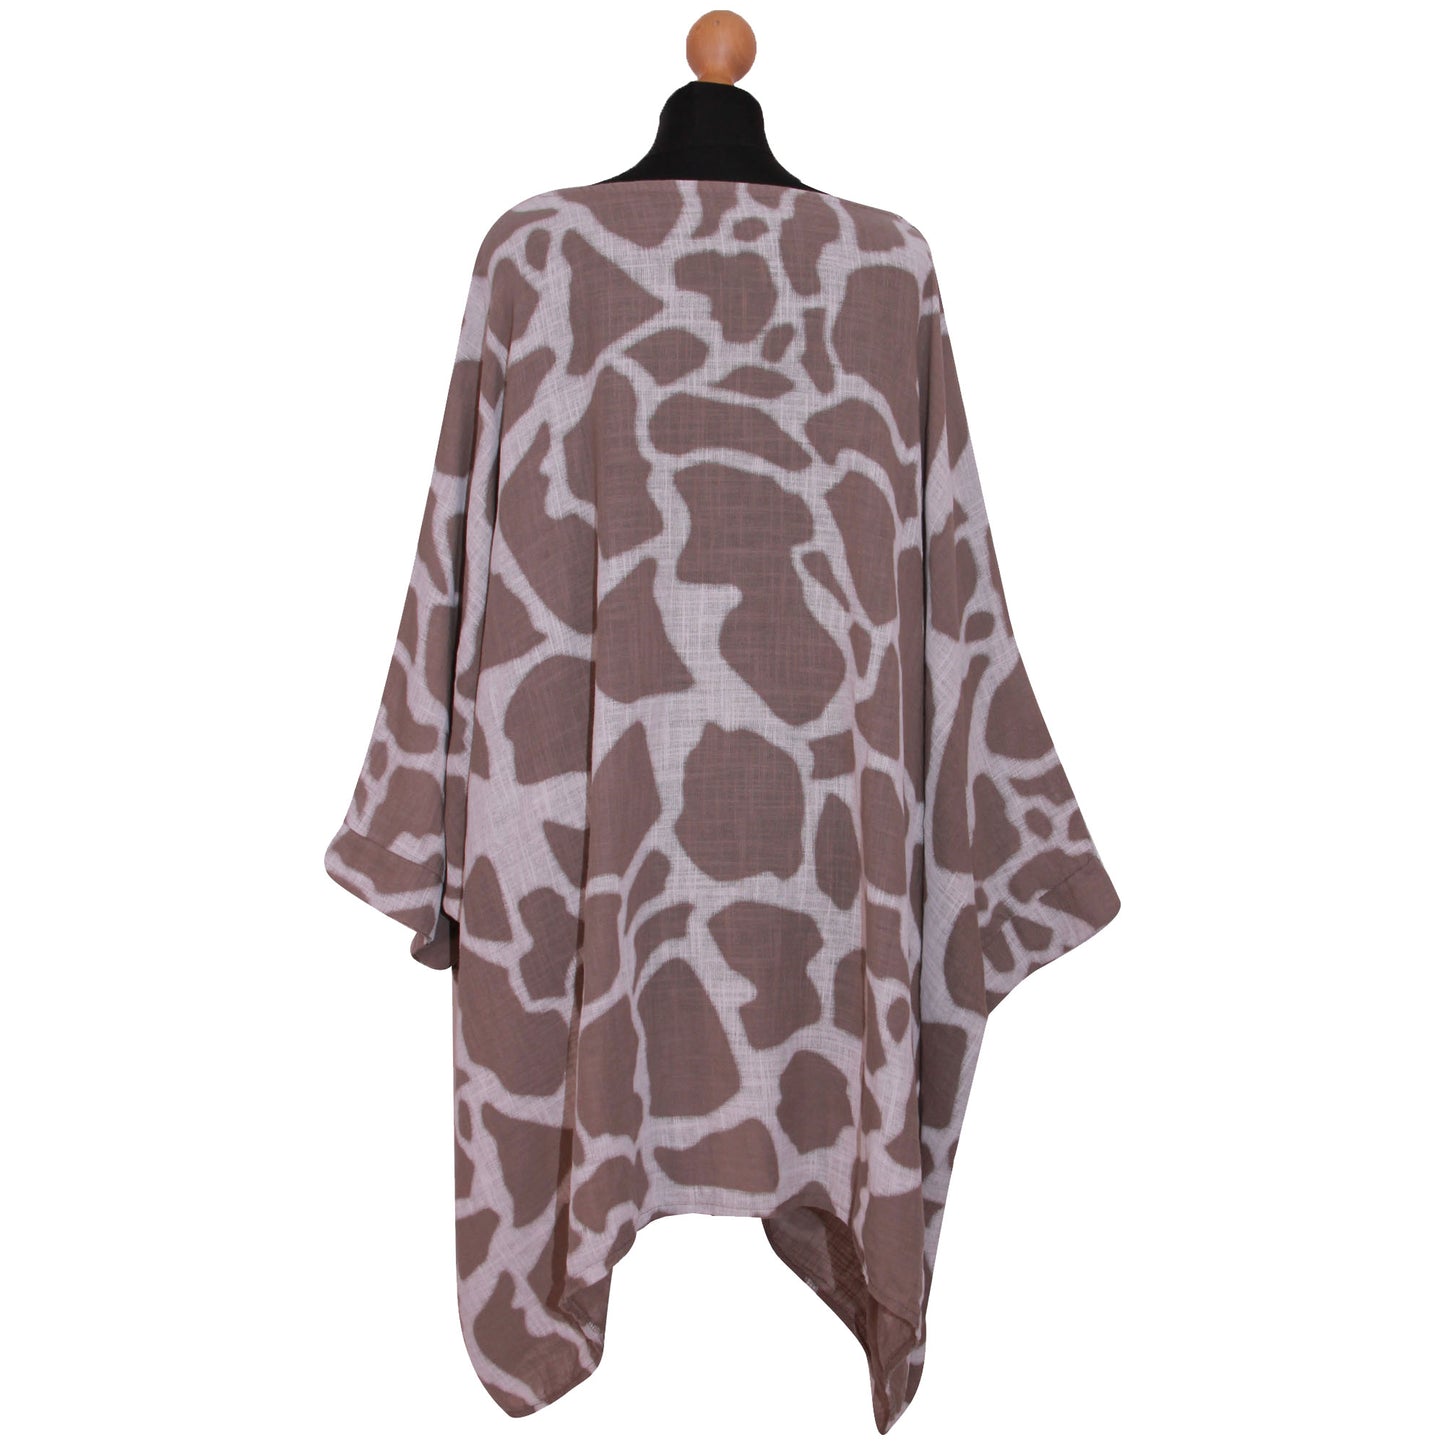 Giraffe Animal Print Ladies Printed Top: Stylish and Trendy Women's Fashion